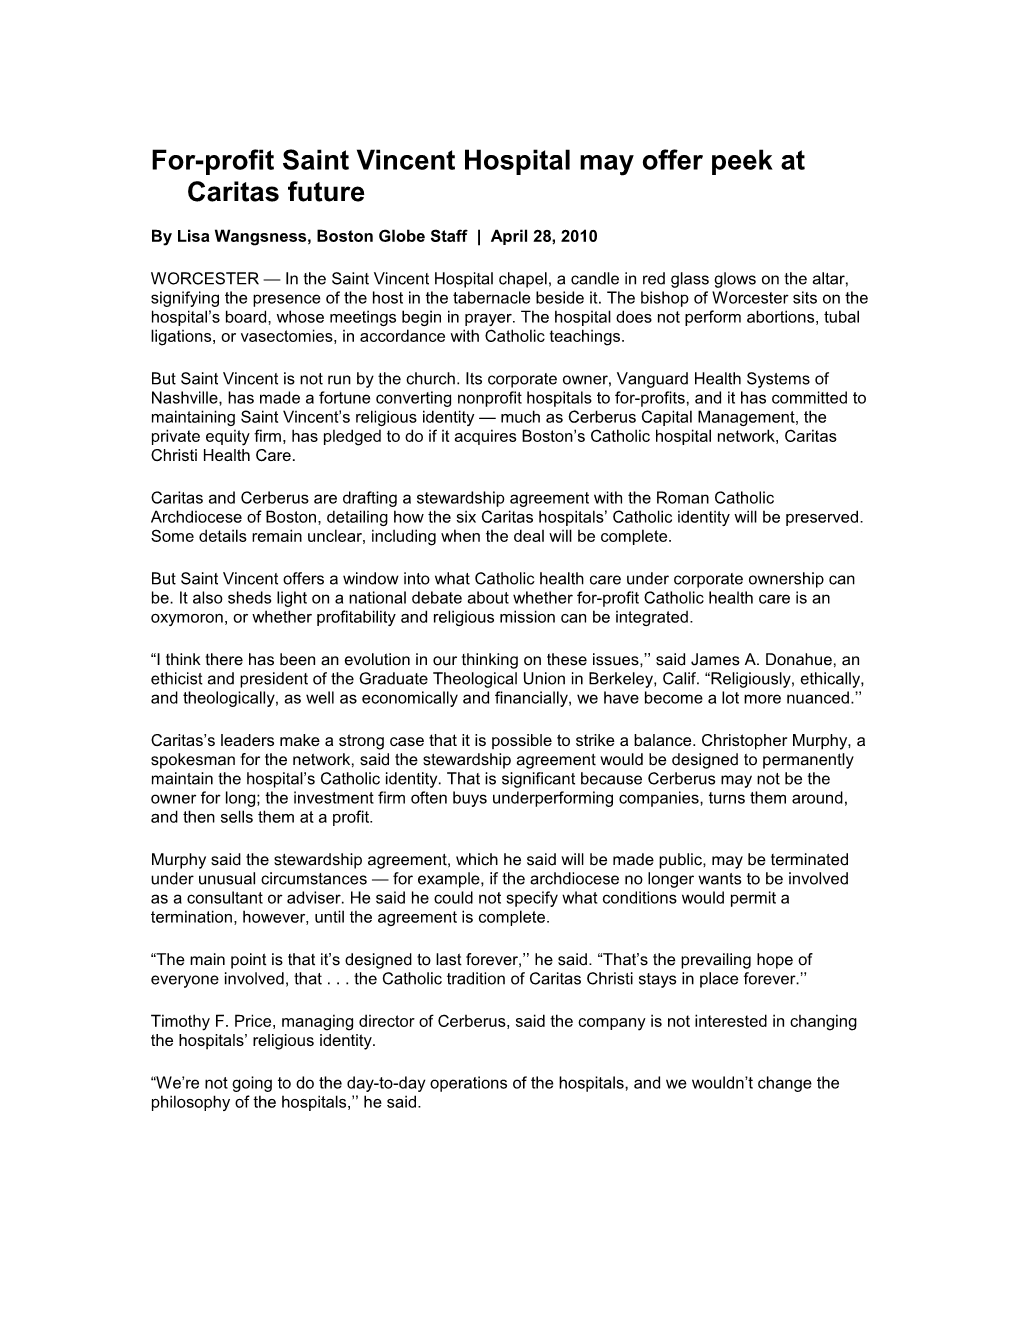 For-Profit Saint Vincent Hospital May Offer Peek at Caritas Future